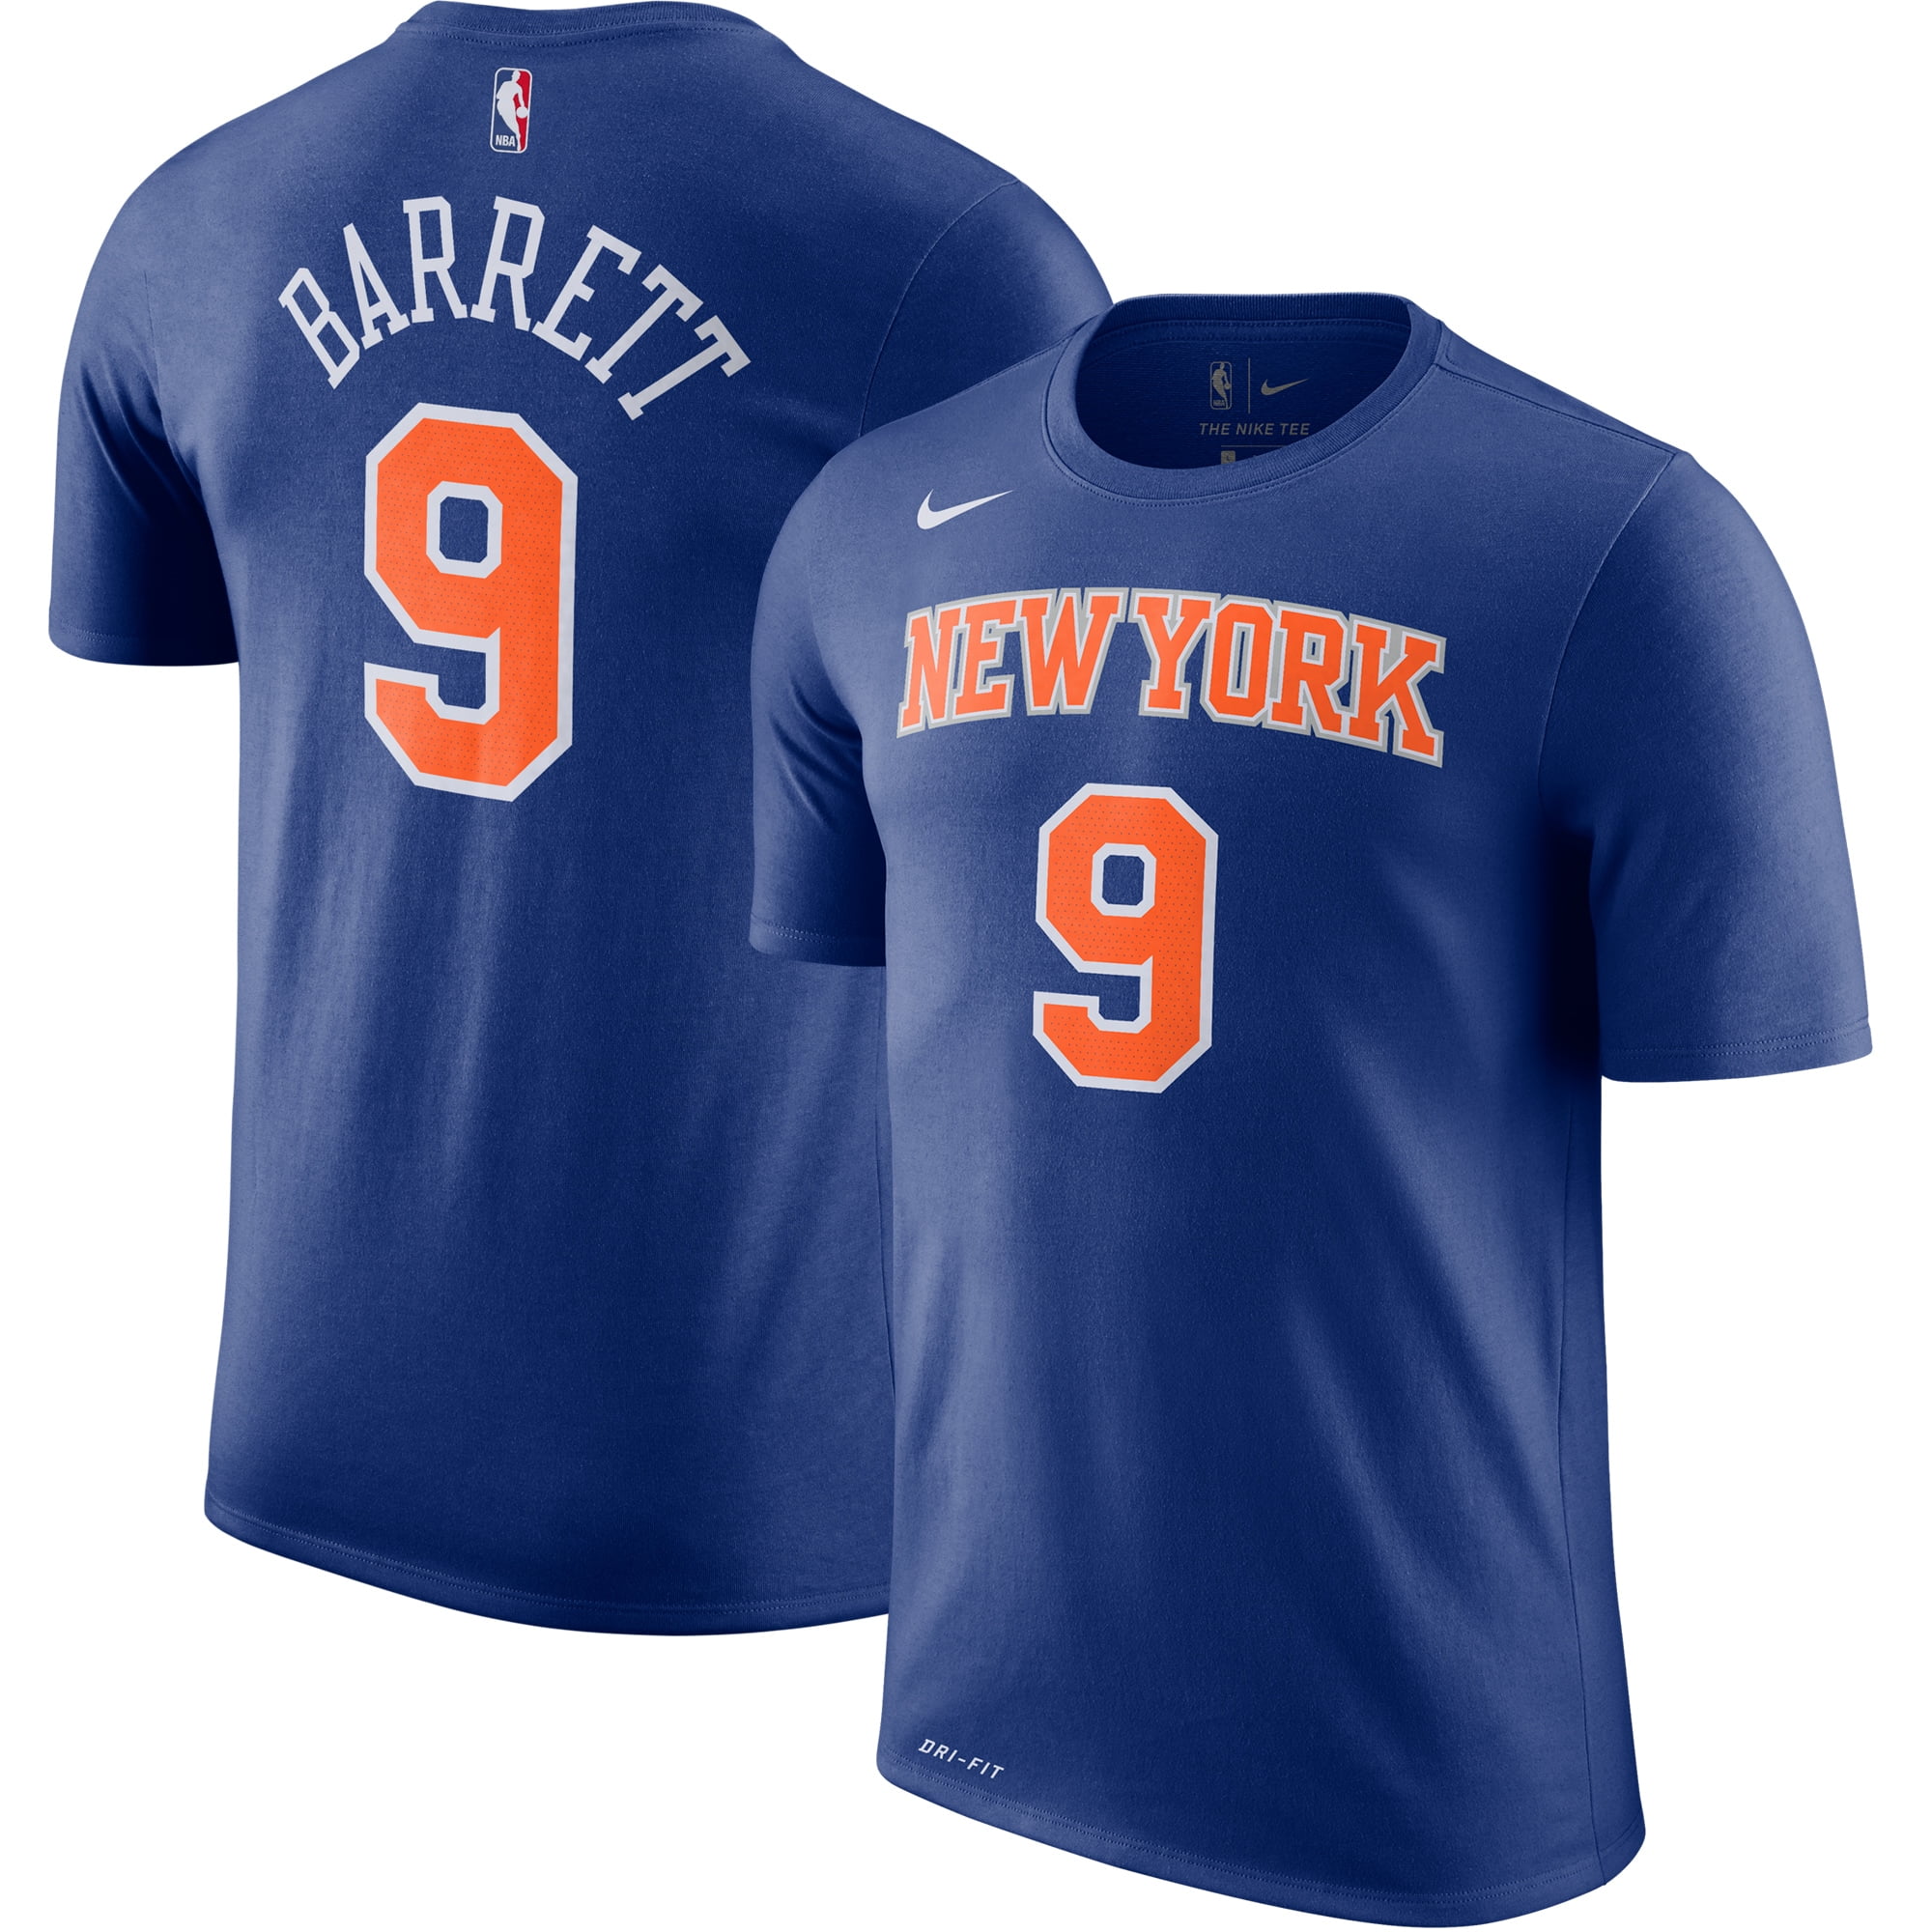 New York Knicks Nike Dri-Fit Short Sleeve Shirt Men's Blue New MT